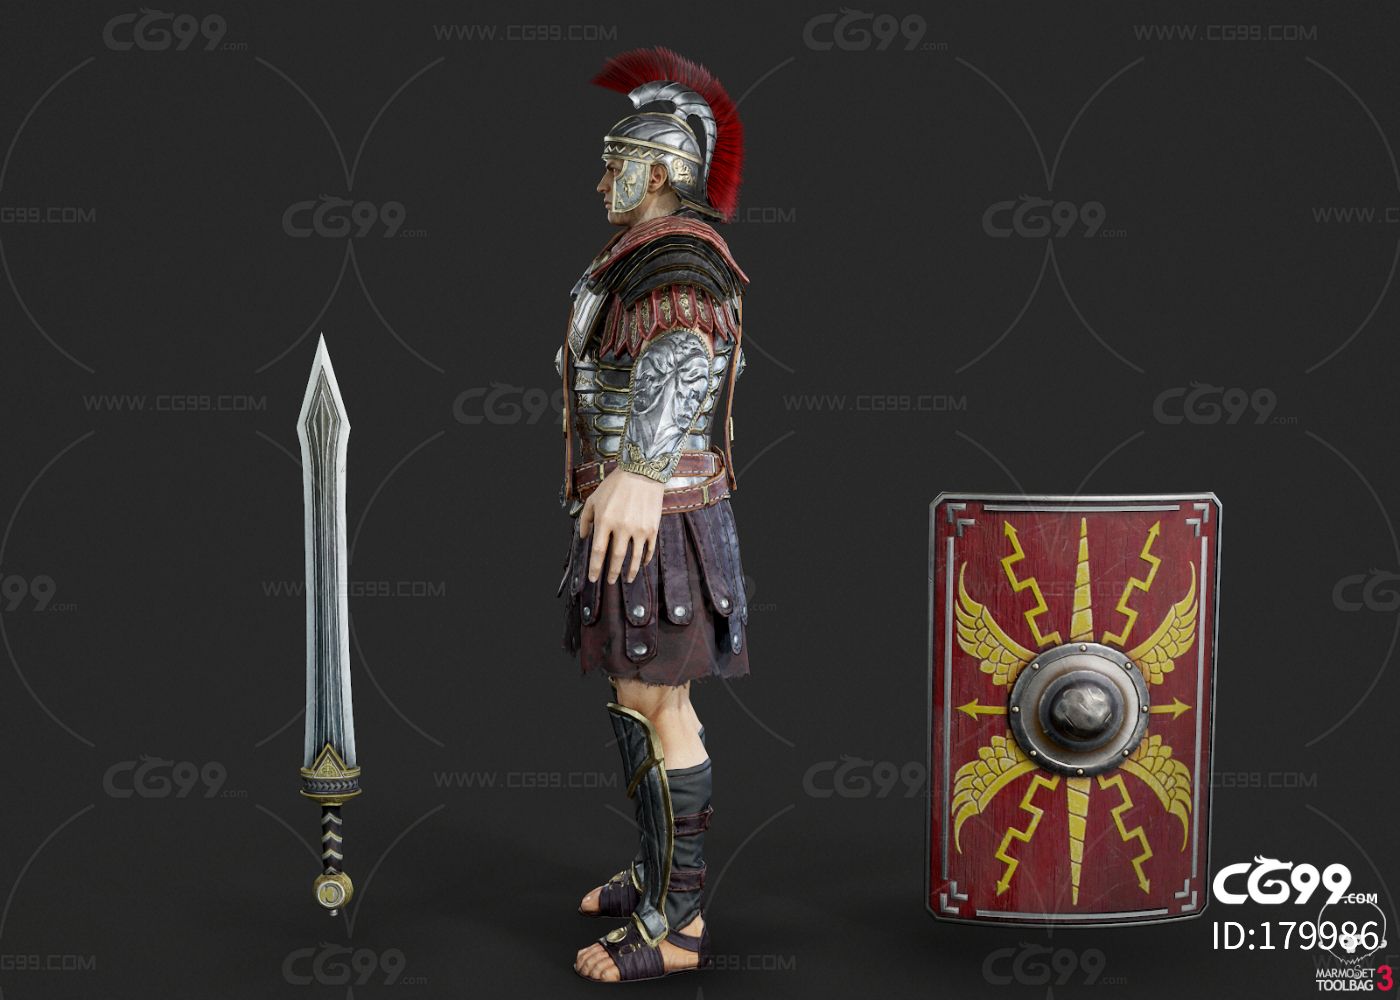 pbr 凯撒大帝 罗马皇帝 古代罗马将军 士兵 战士 罗马风格盔甲 铠甲